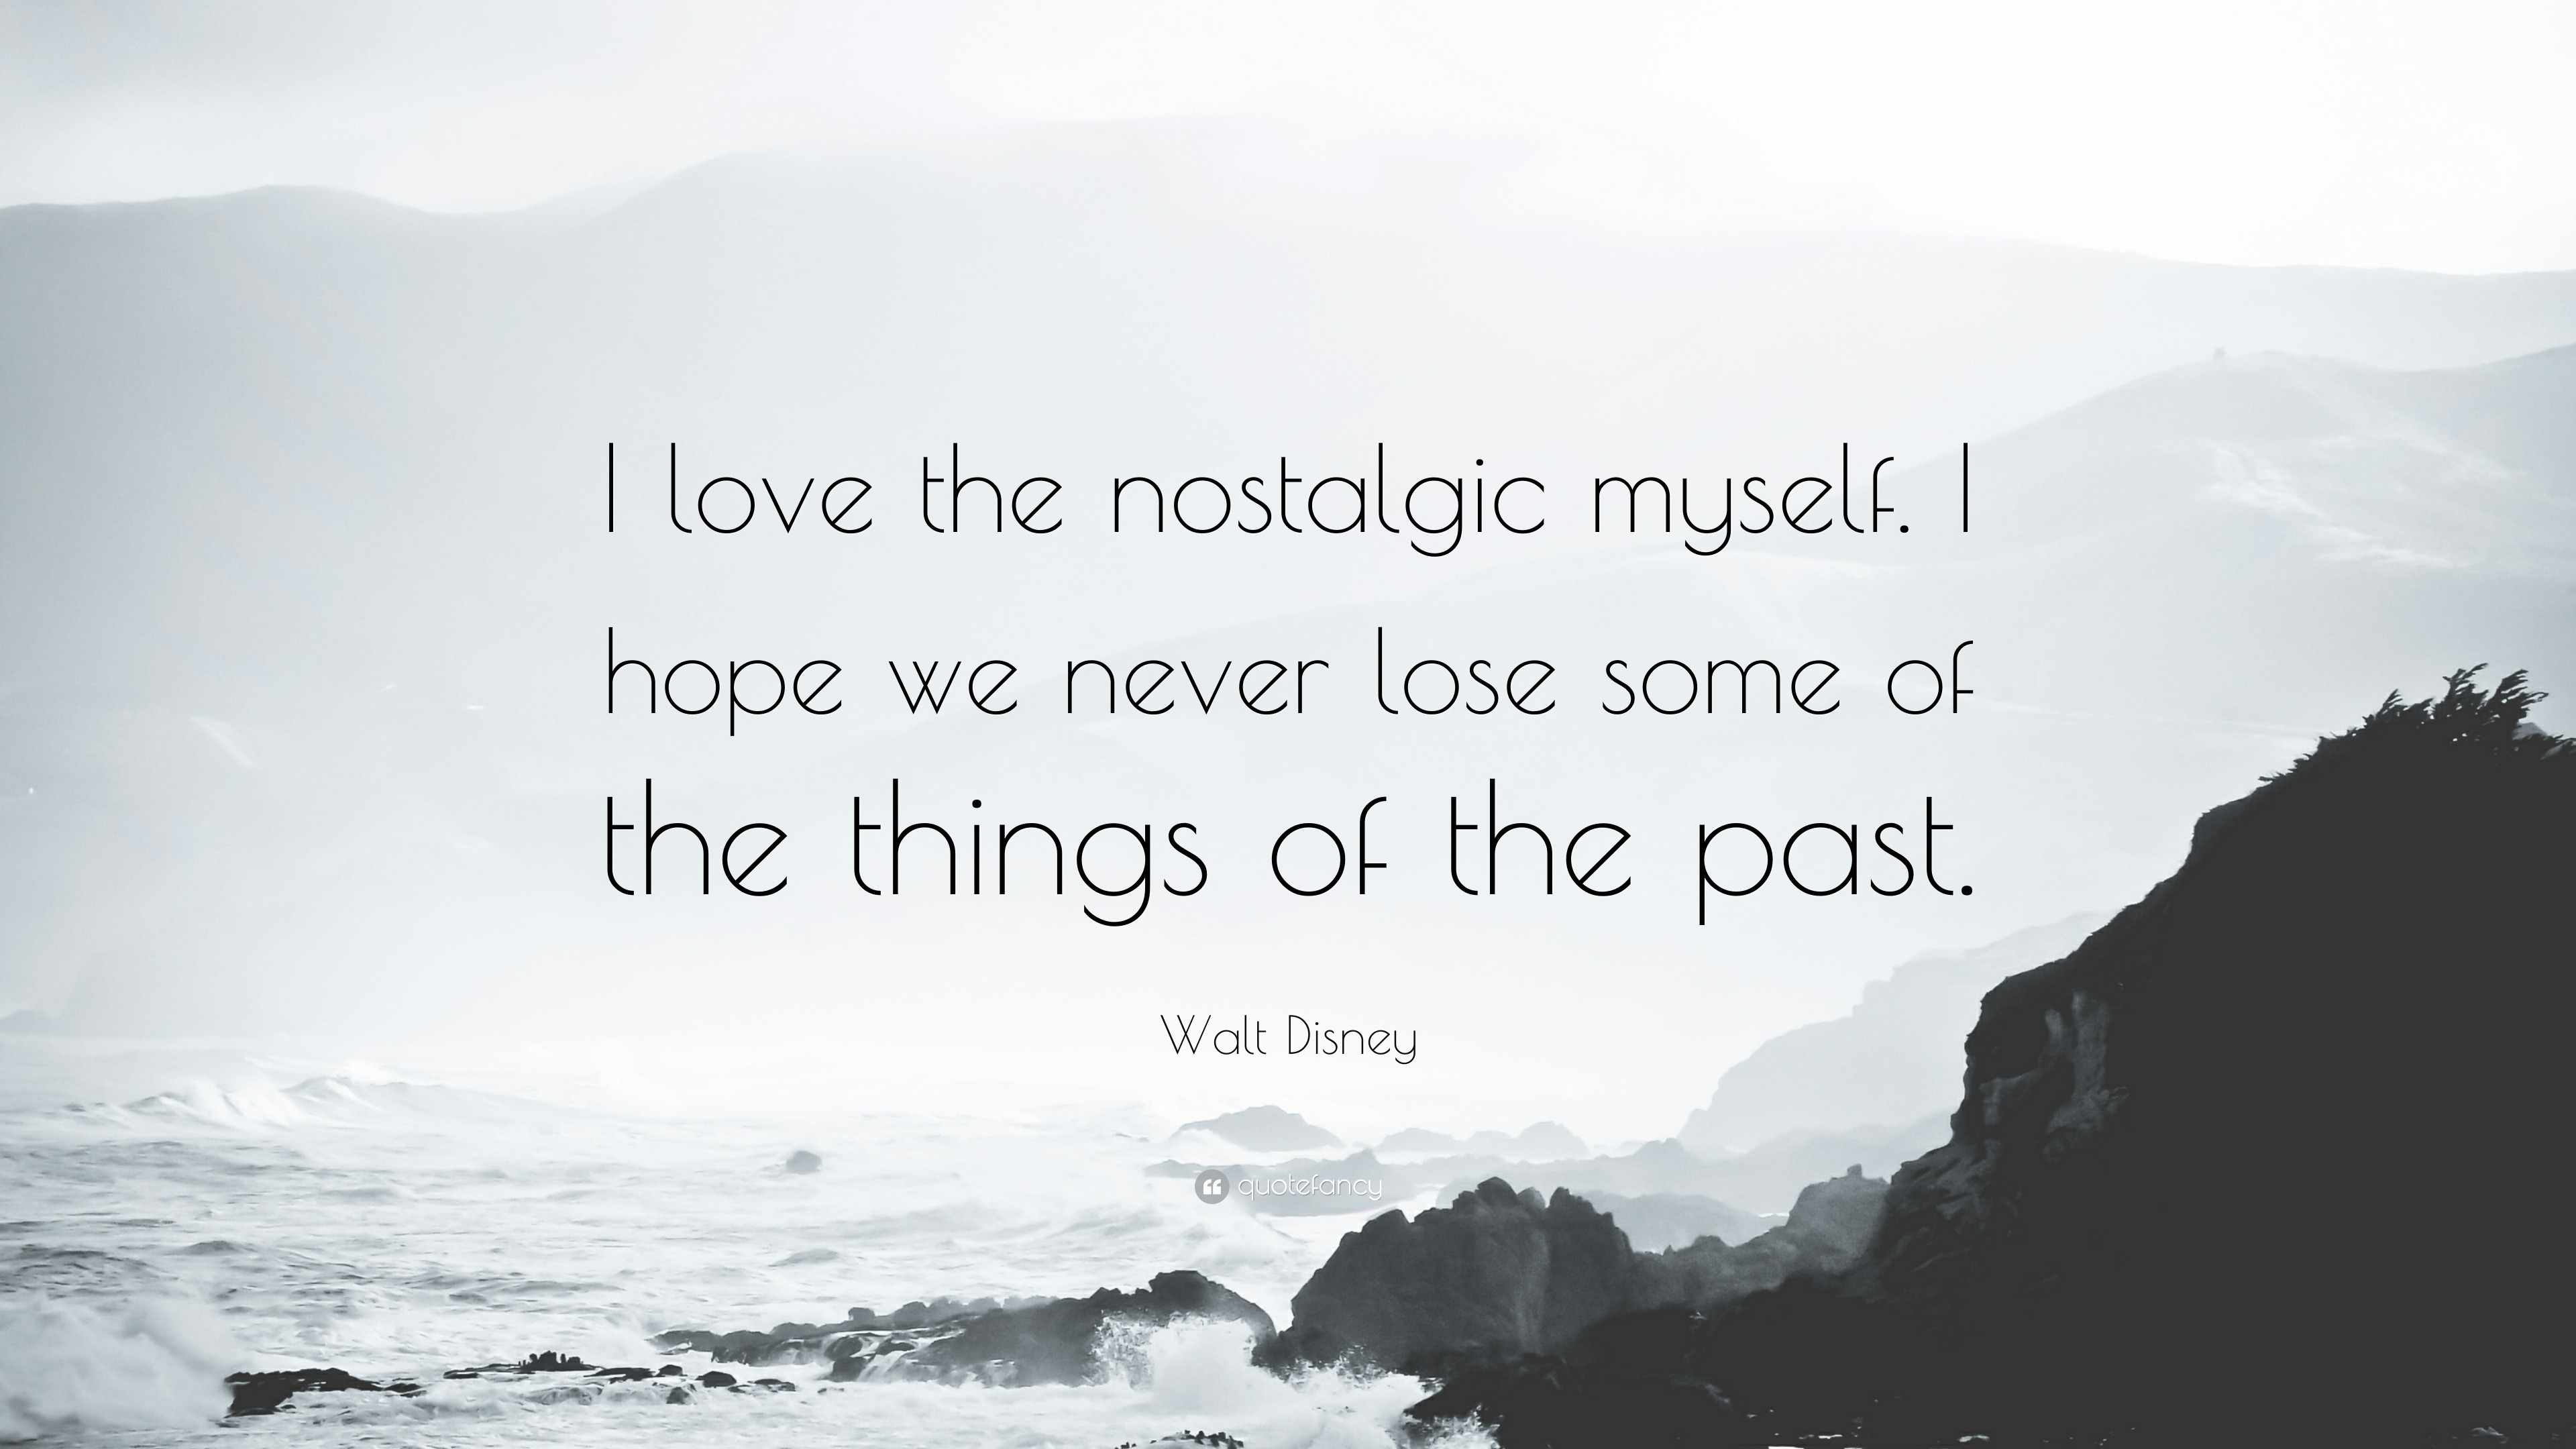 Walt Disney Quote “I love the nostalgic myself I hope we never lose